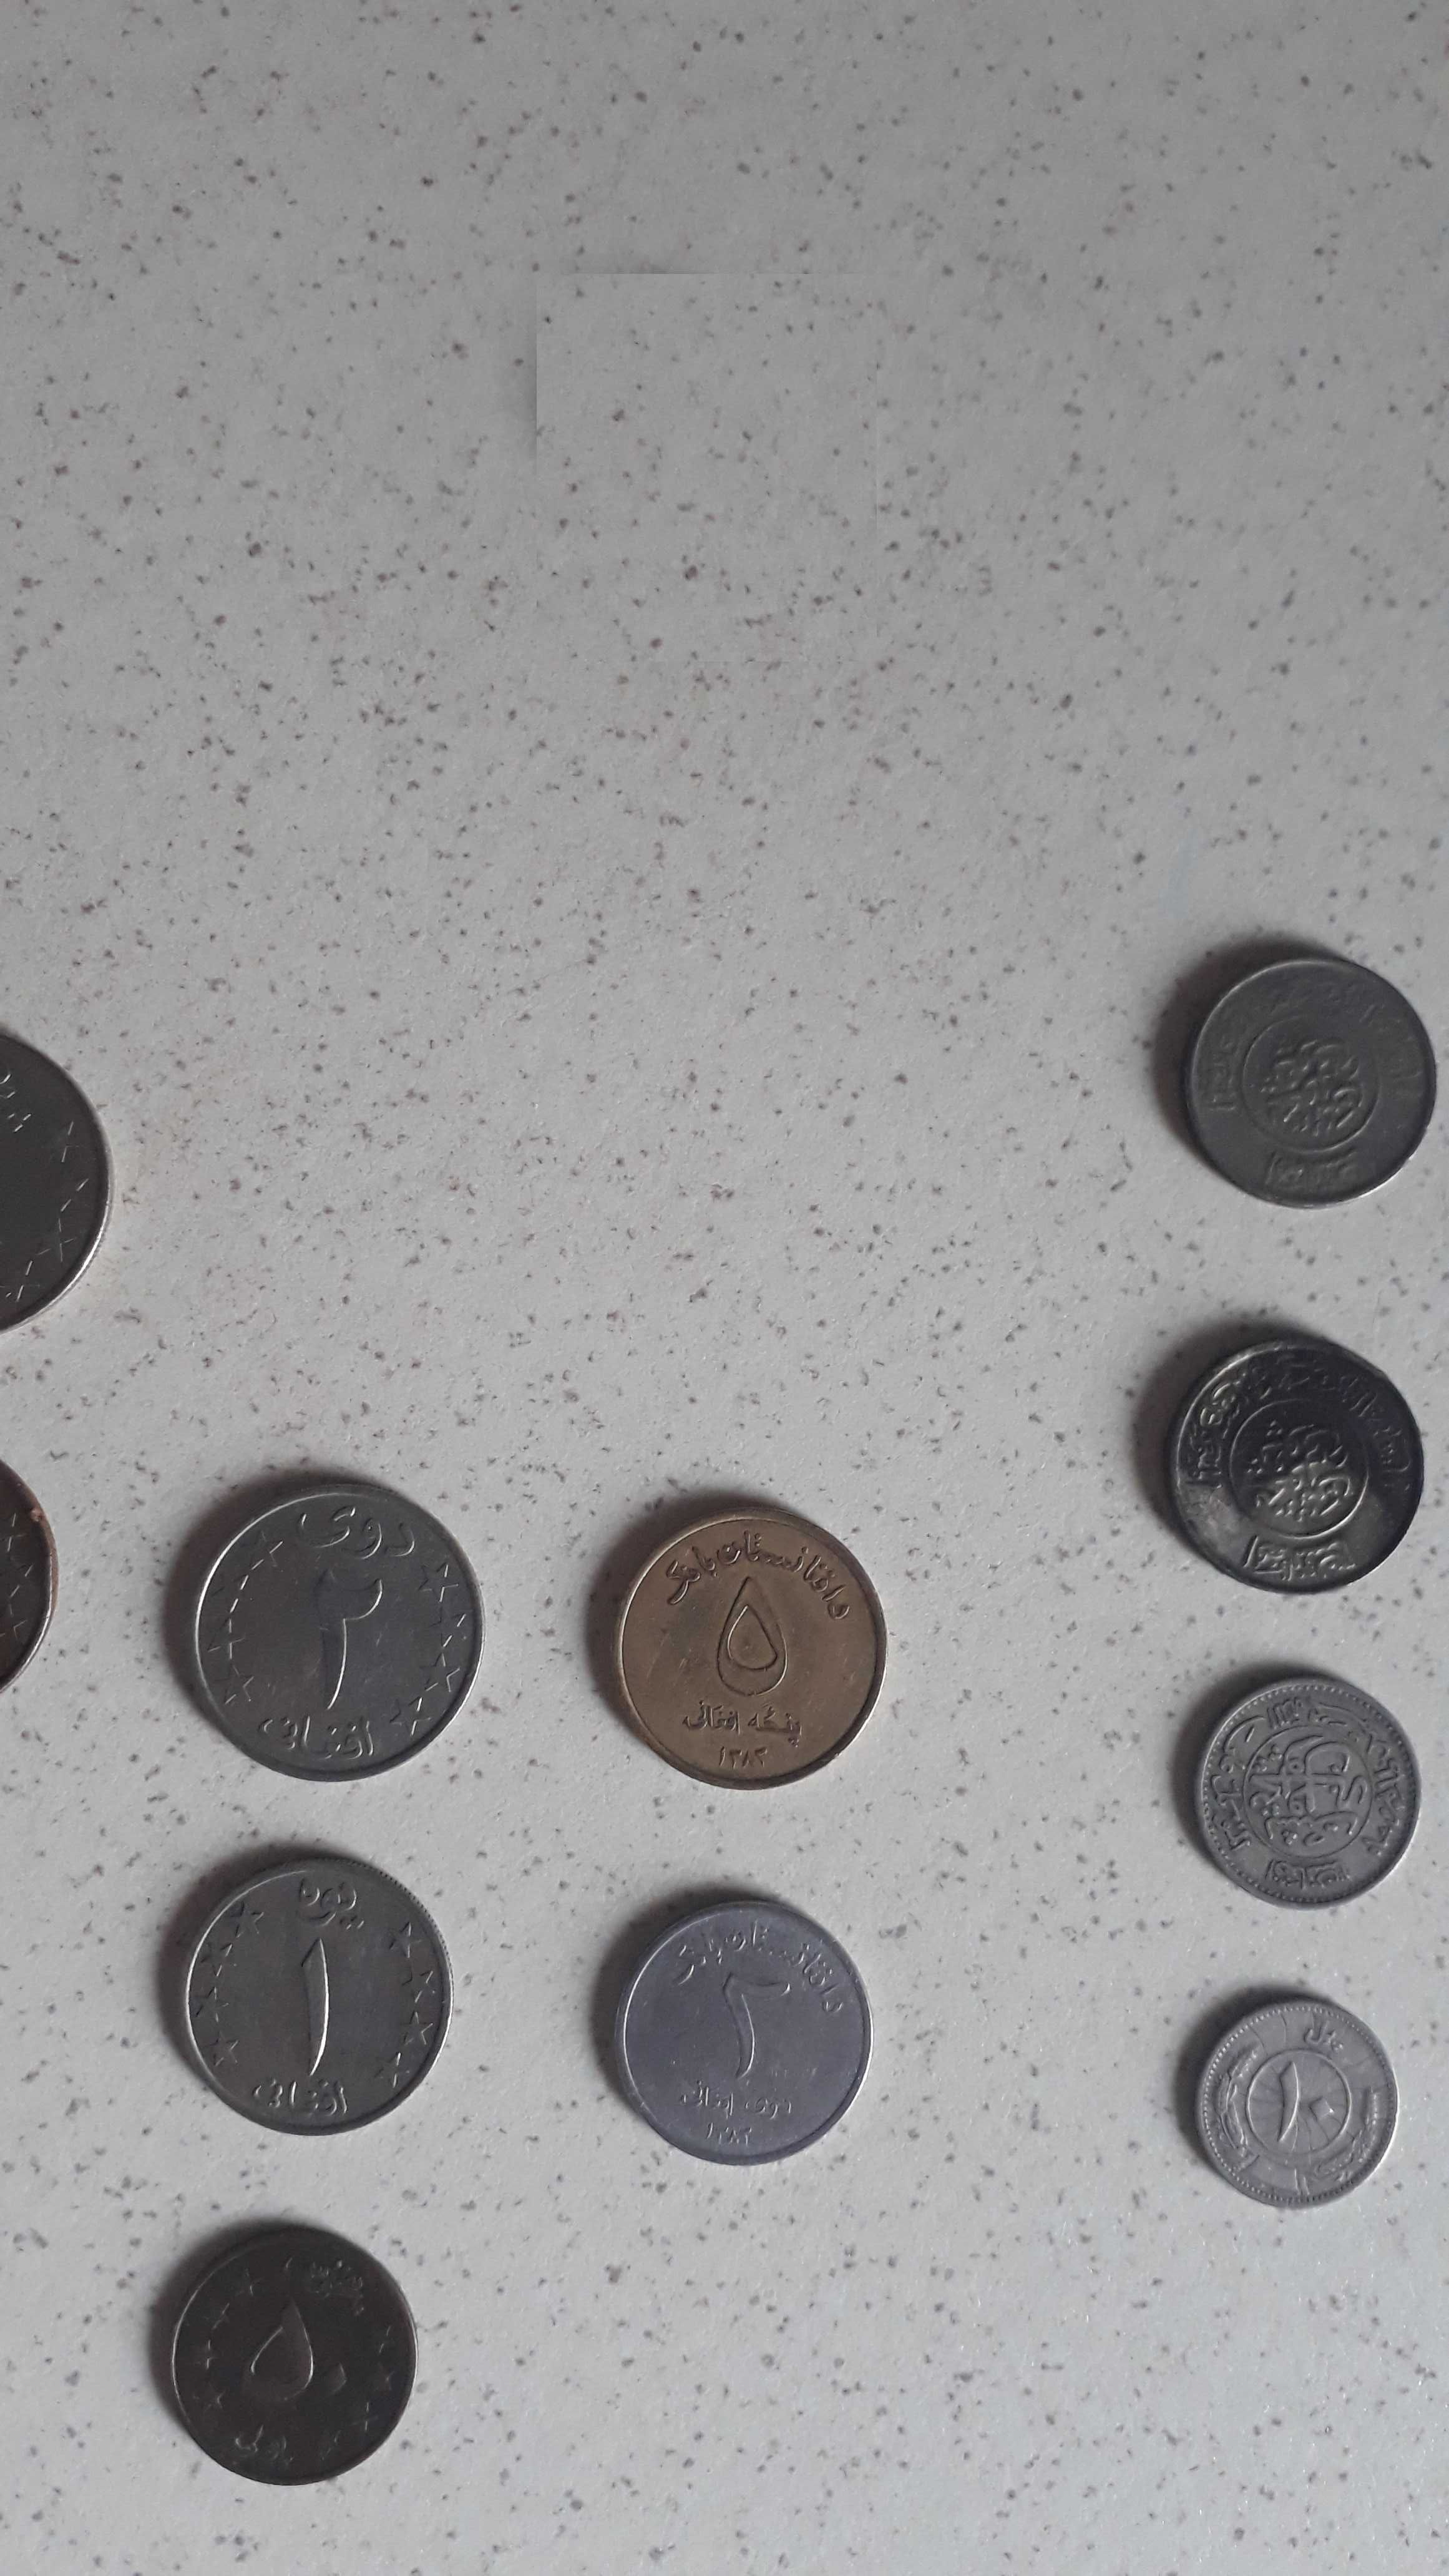 Afganistan monety obiegowe stare